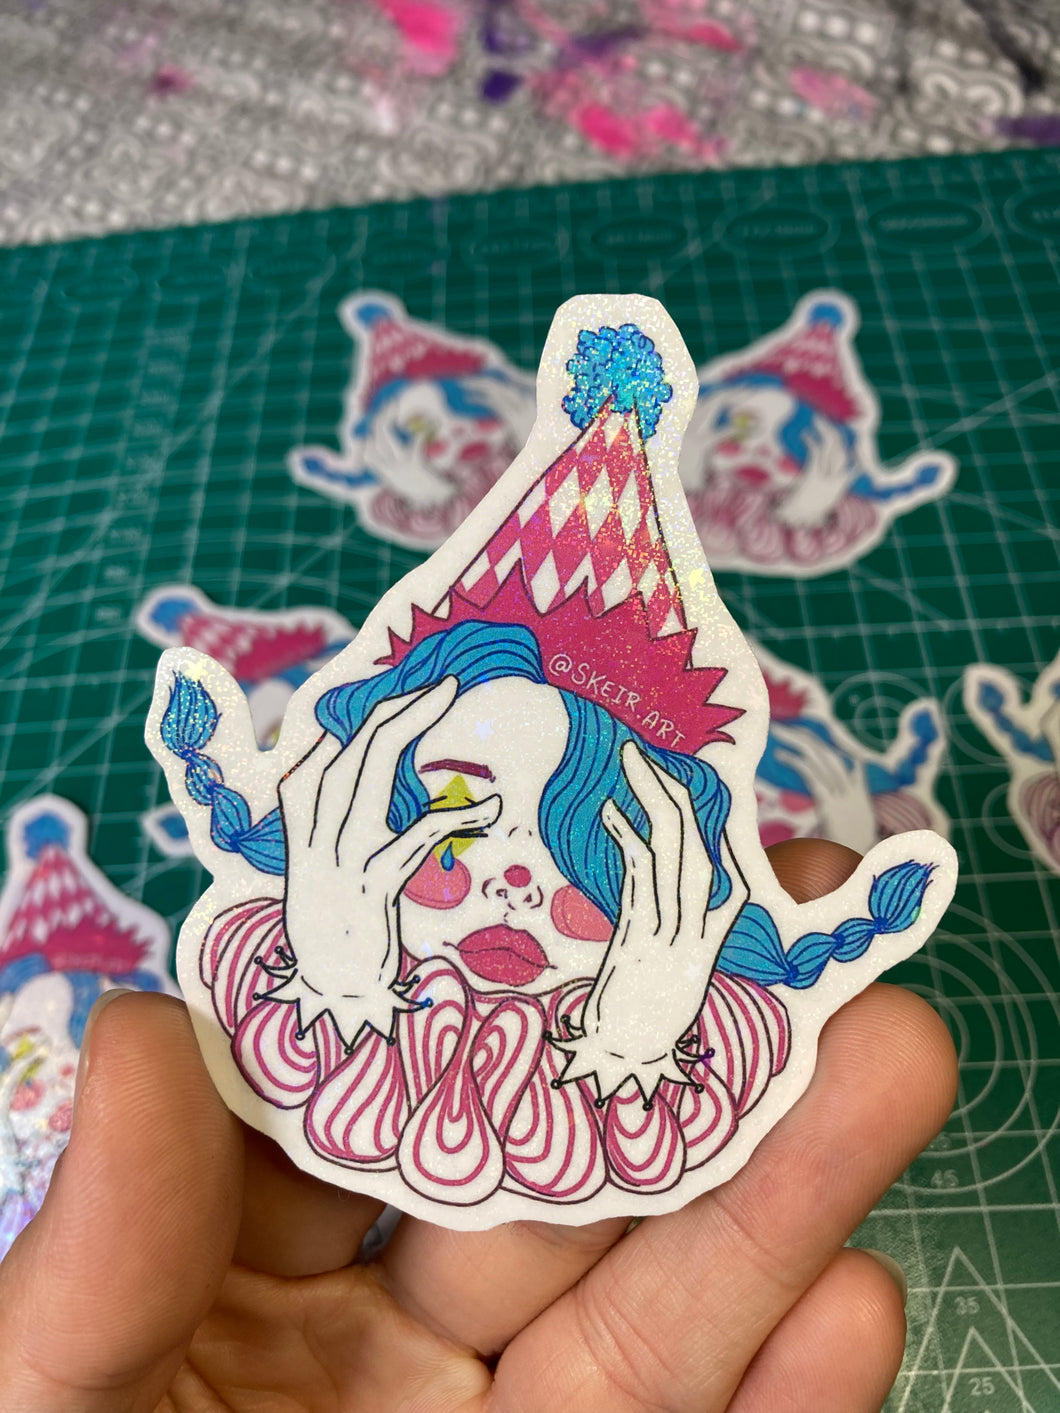 Sad Clown Girl holographic sticker